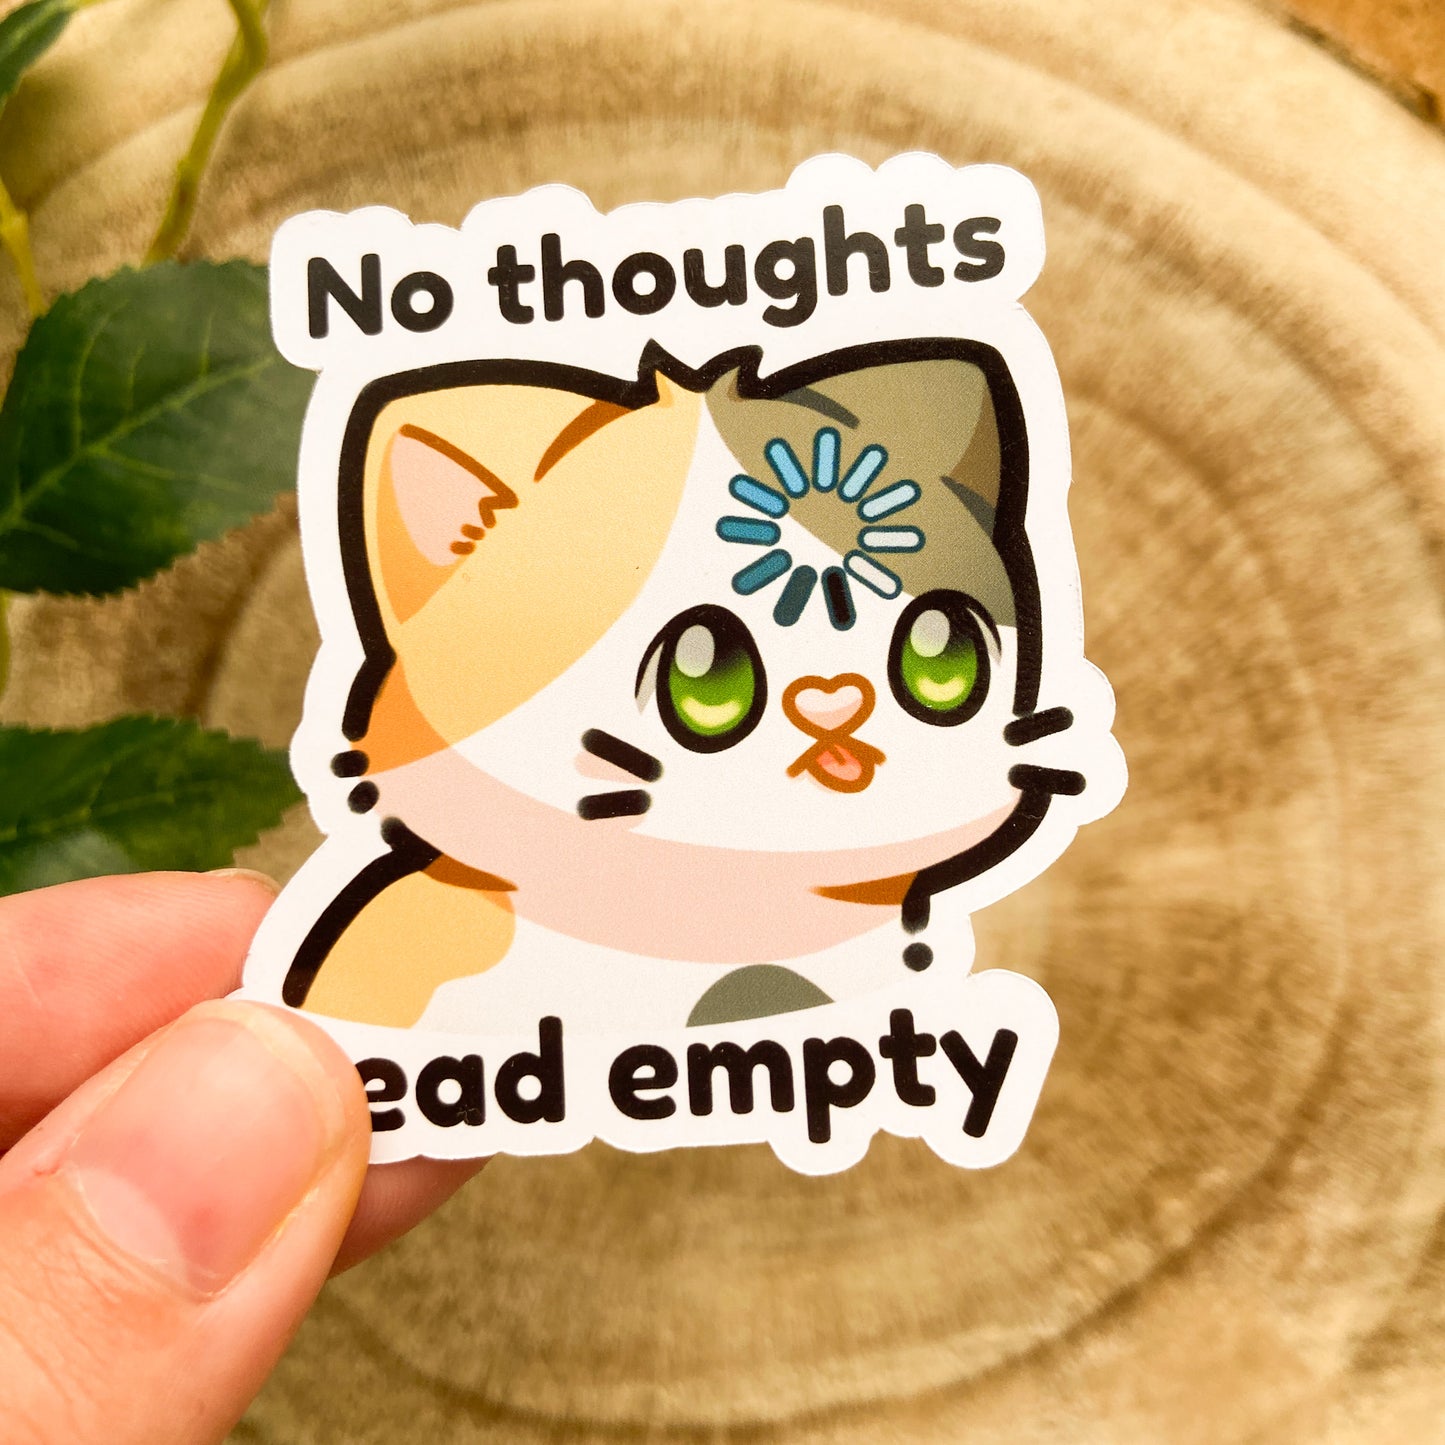 Head empty sticker